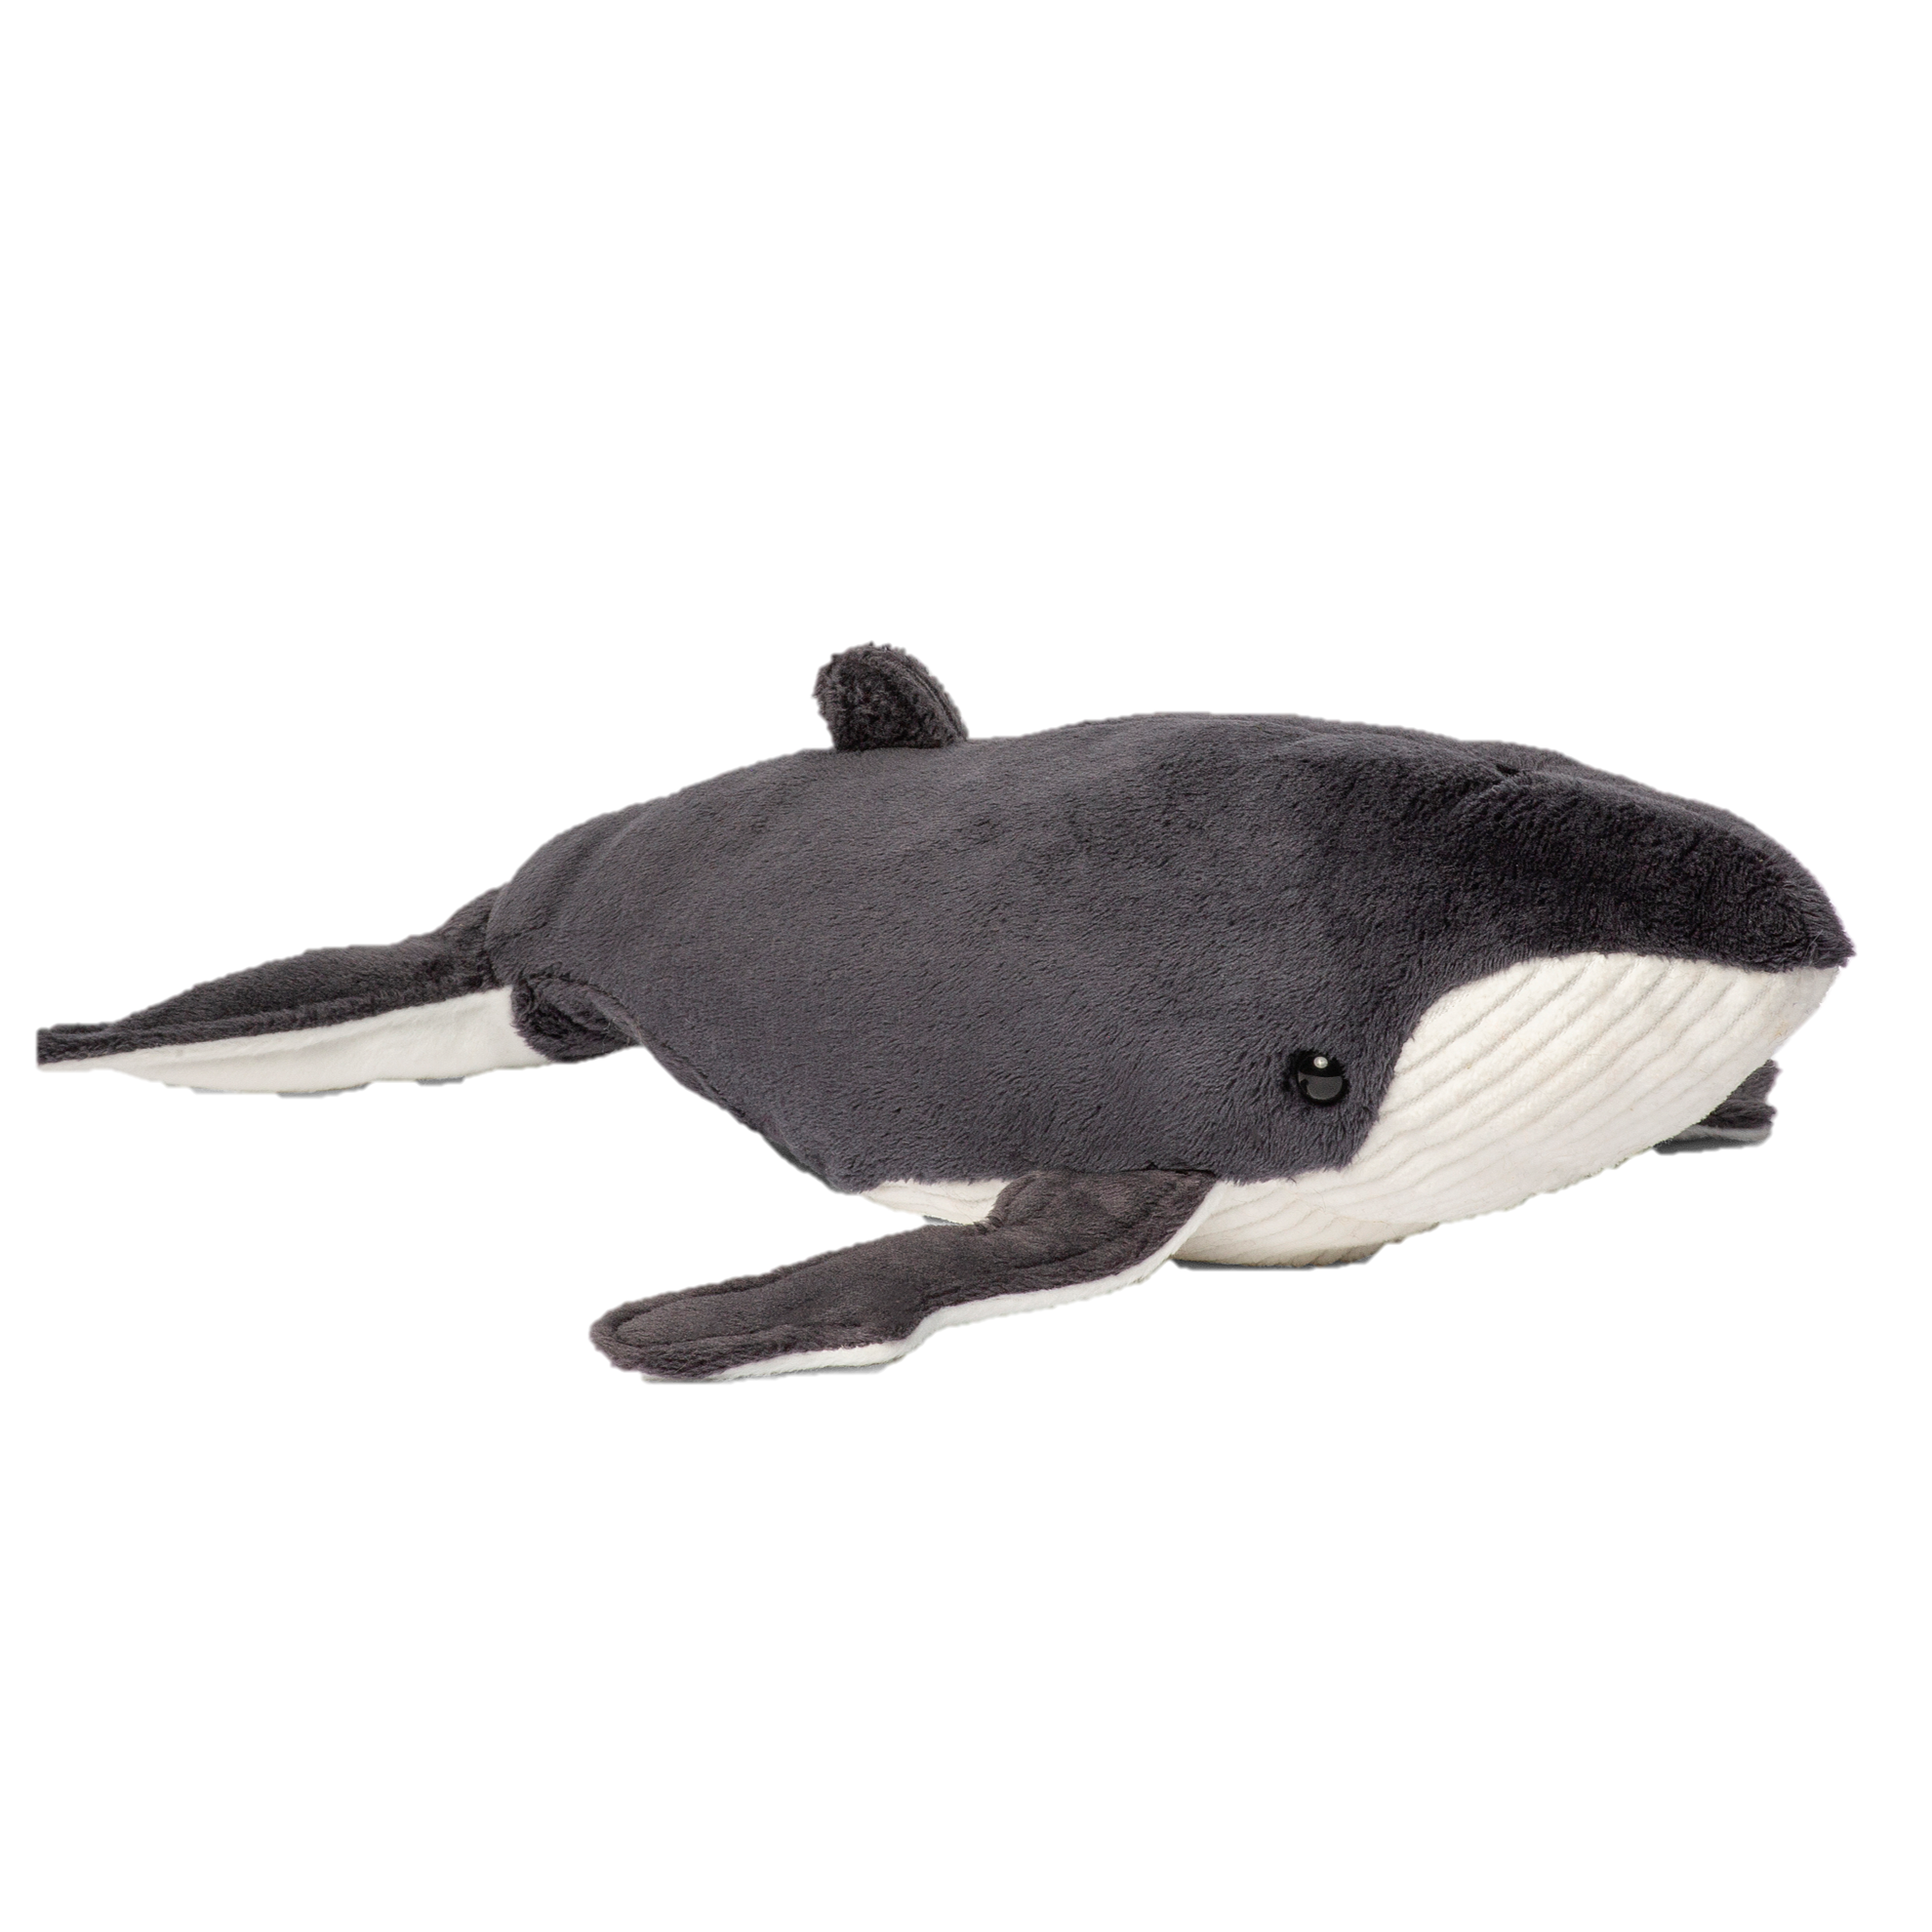 A humpback whale plush toy